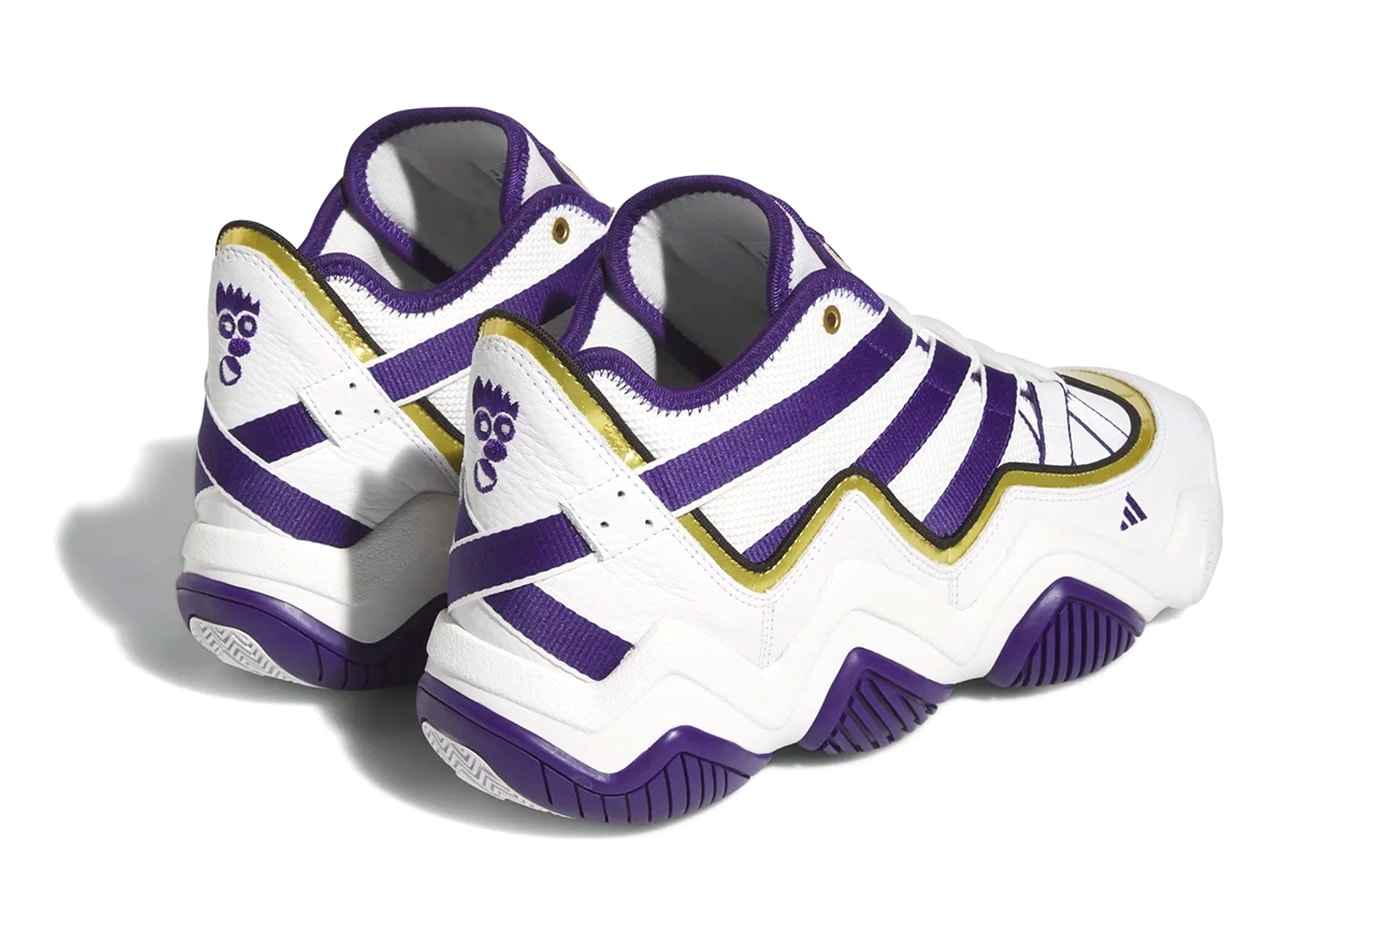 adidas Top Ten 2010 worn by Kobe Bryant • Reebok Question worn by